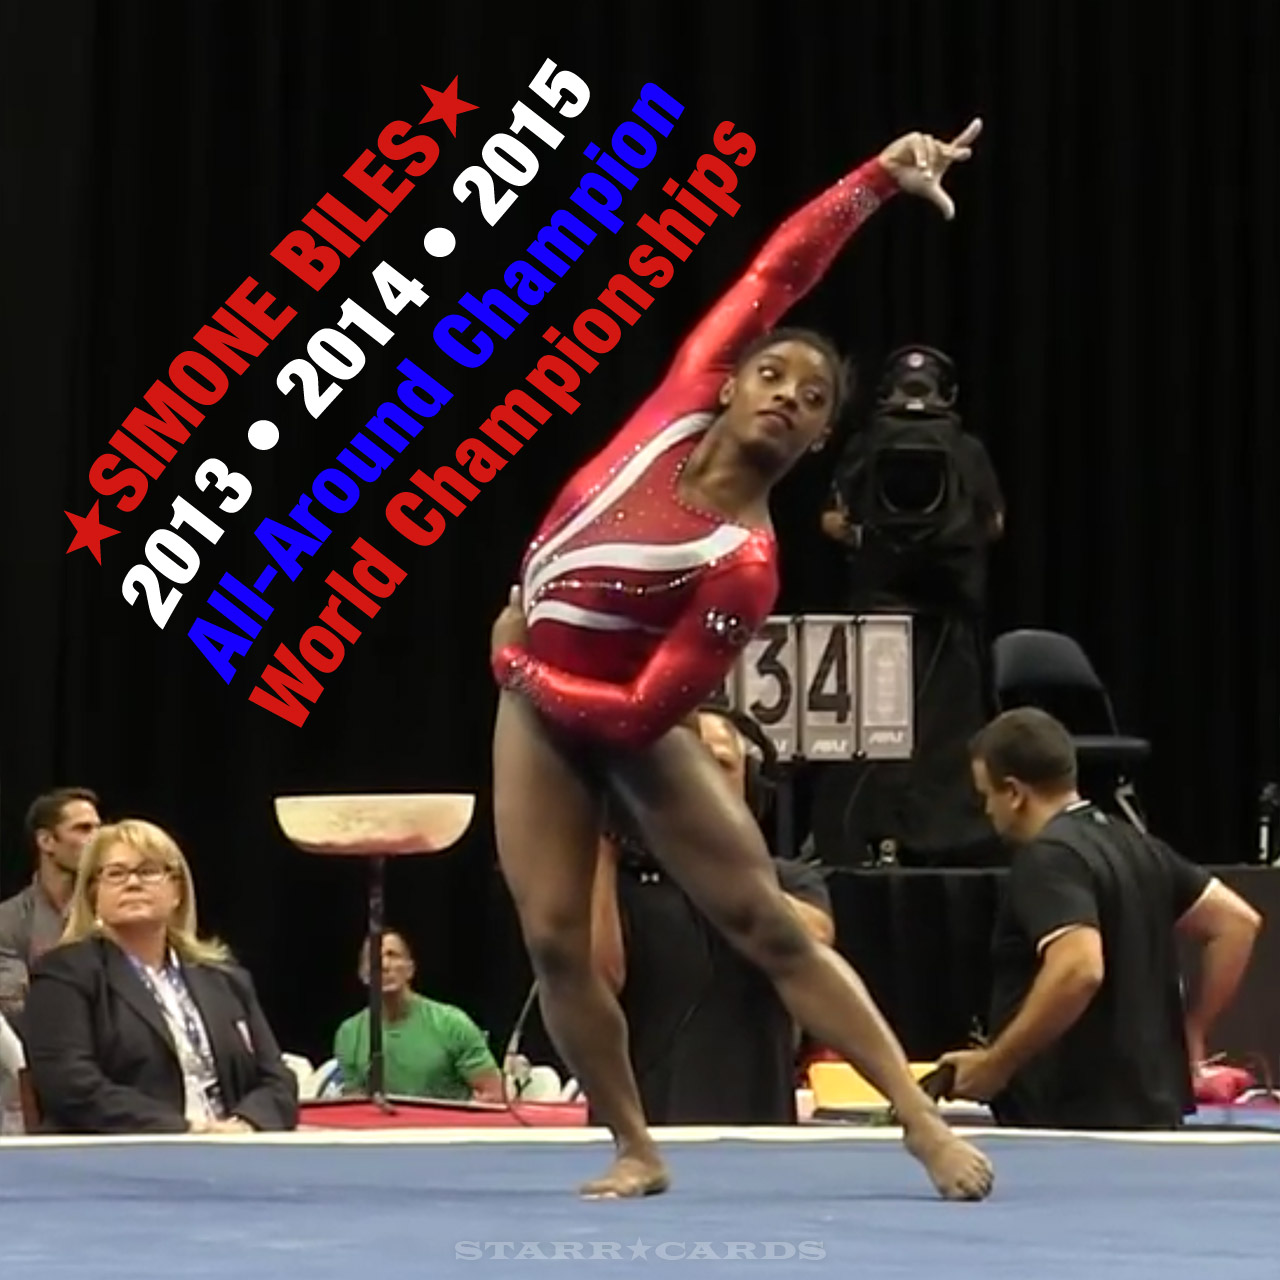 Gymnast Simone Biles three-peats as World All-Around Champion